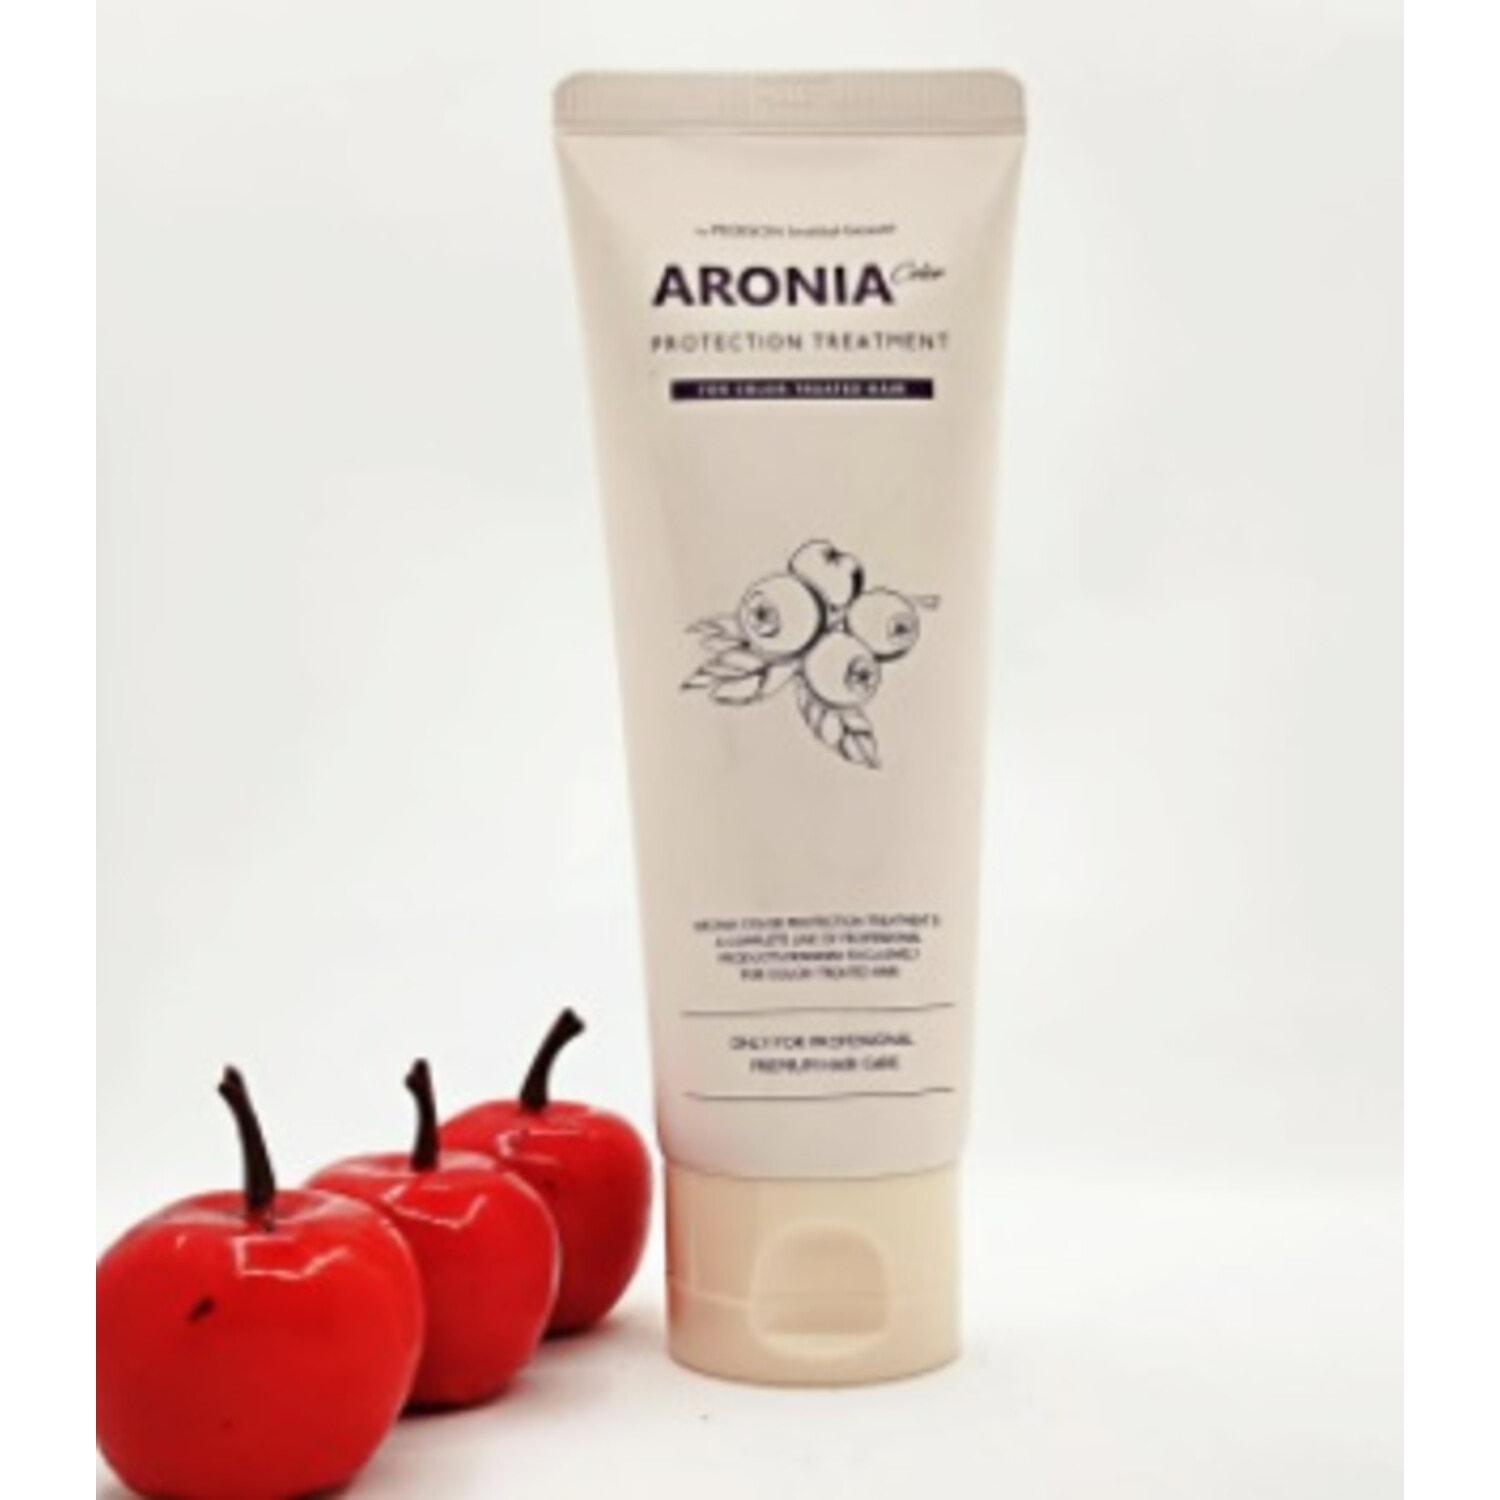 EVAS Pedison Institute-beaute Aronia Color Protection Treatment Кондиционер-маска для волос после окрашивания, 100 мл. / 004877